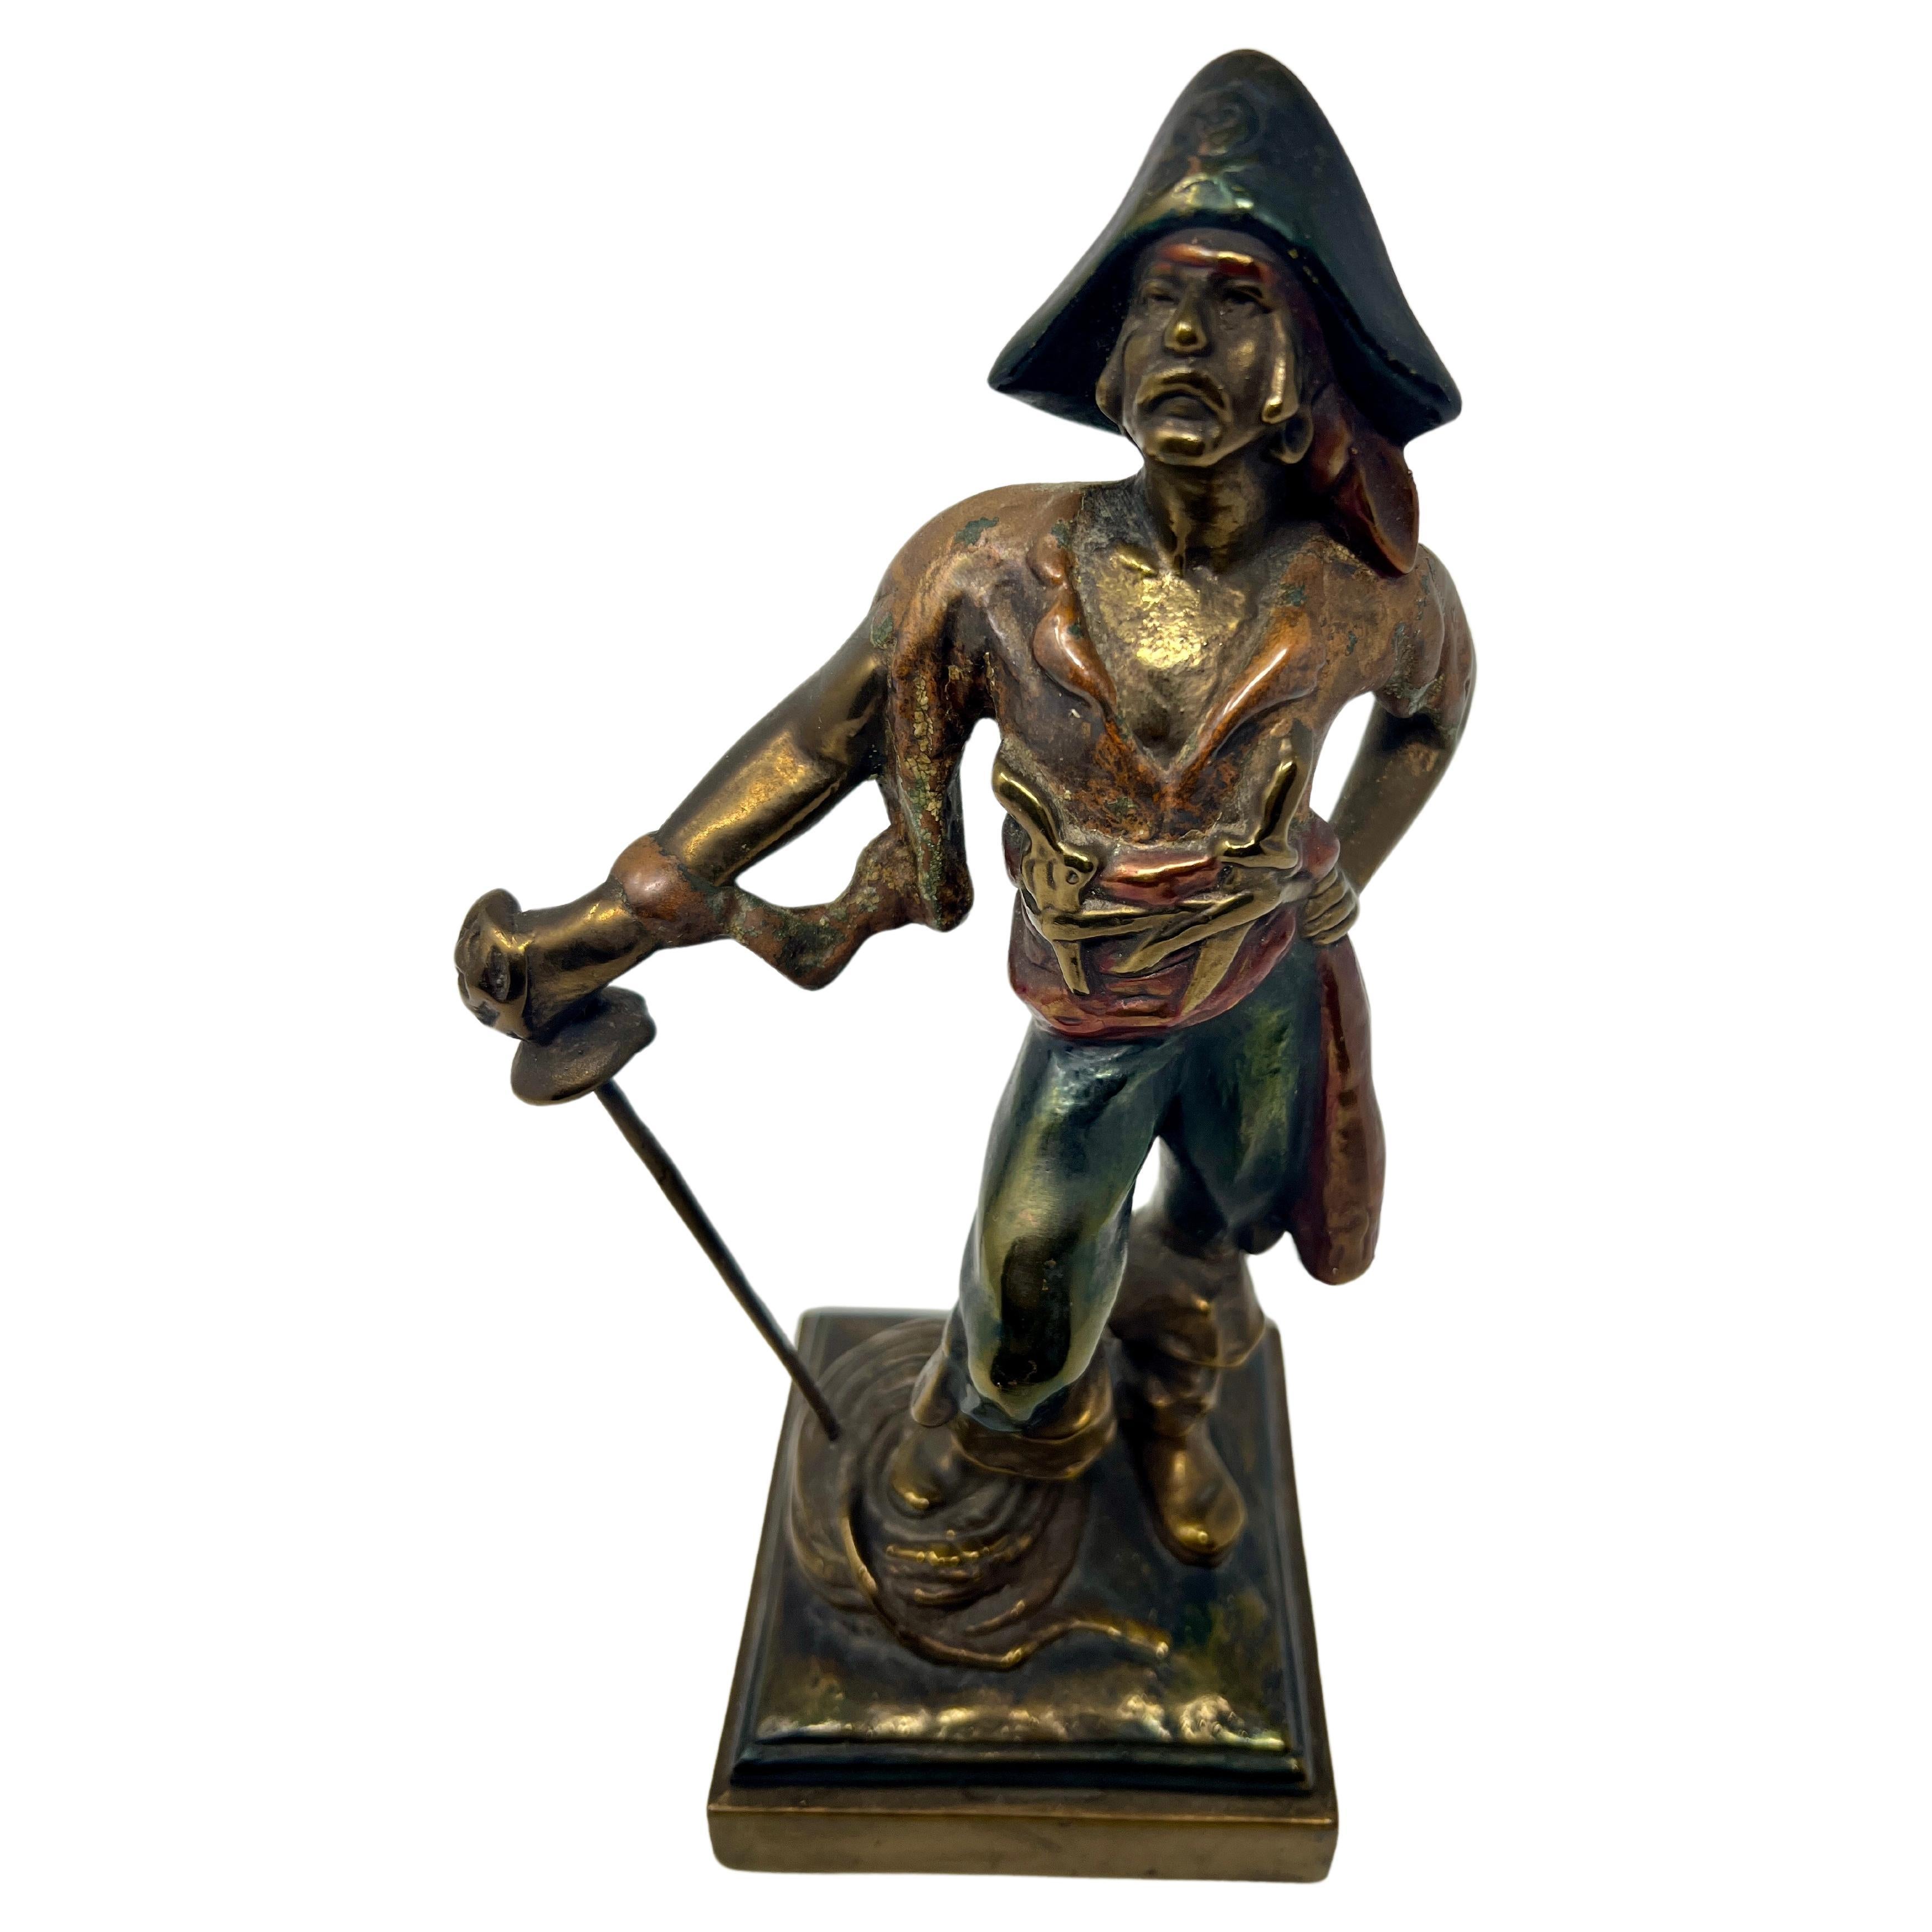 Ancienne figurine de pirate allemande en métal moulé signée Paul Herzel (1876-1956).